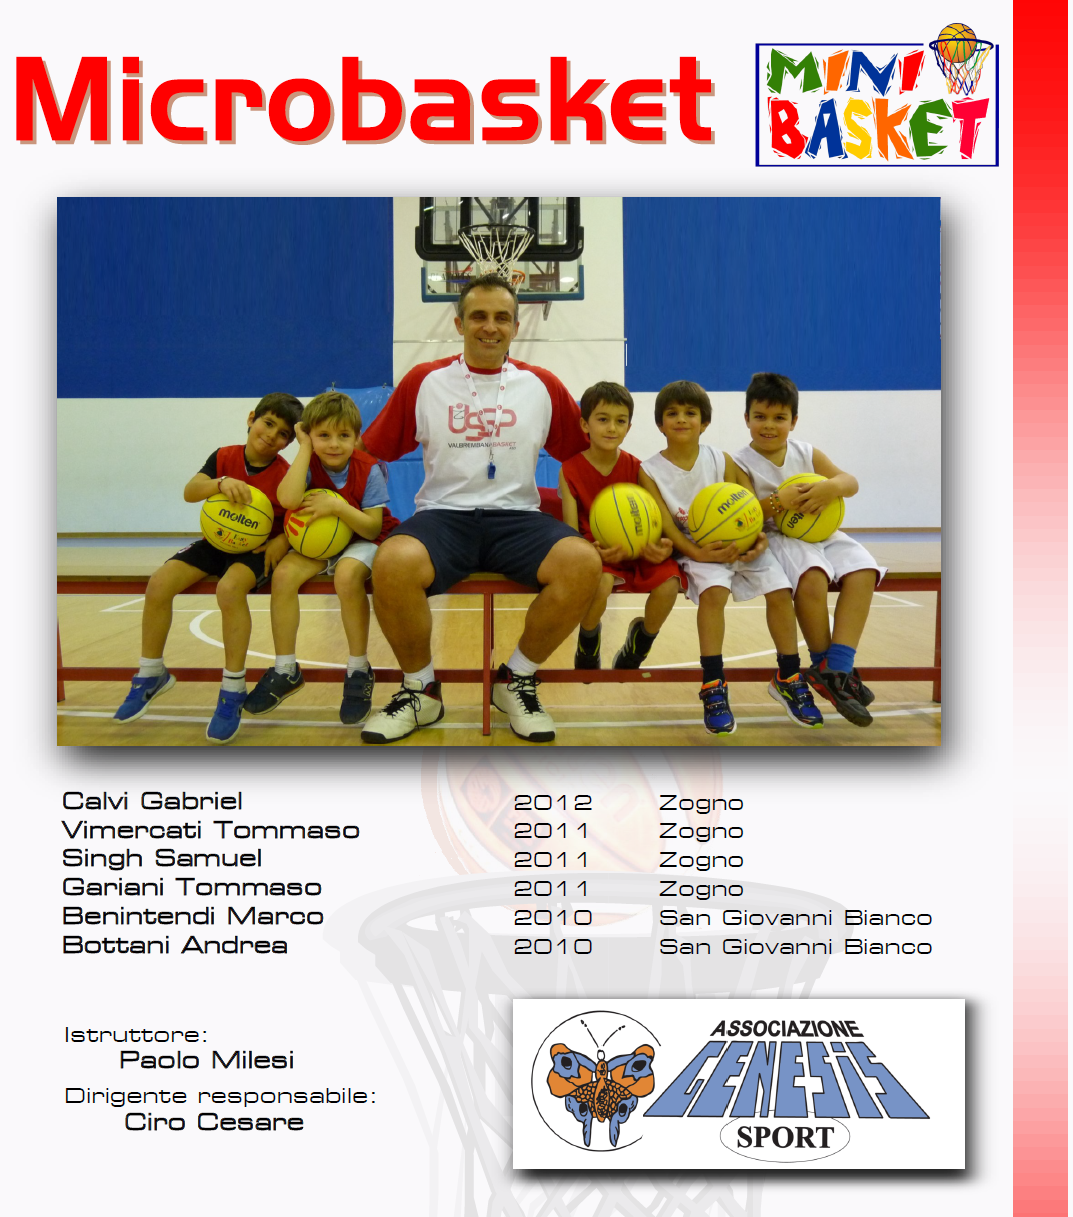 Microbasket 2017/18